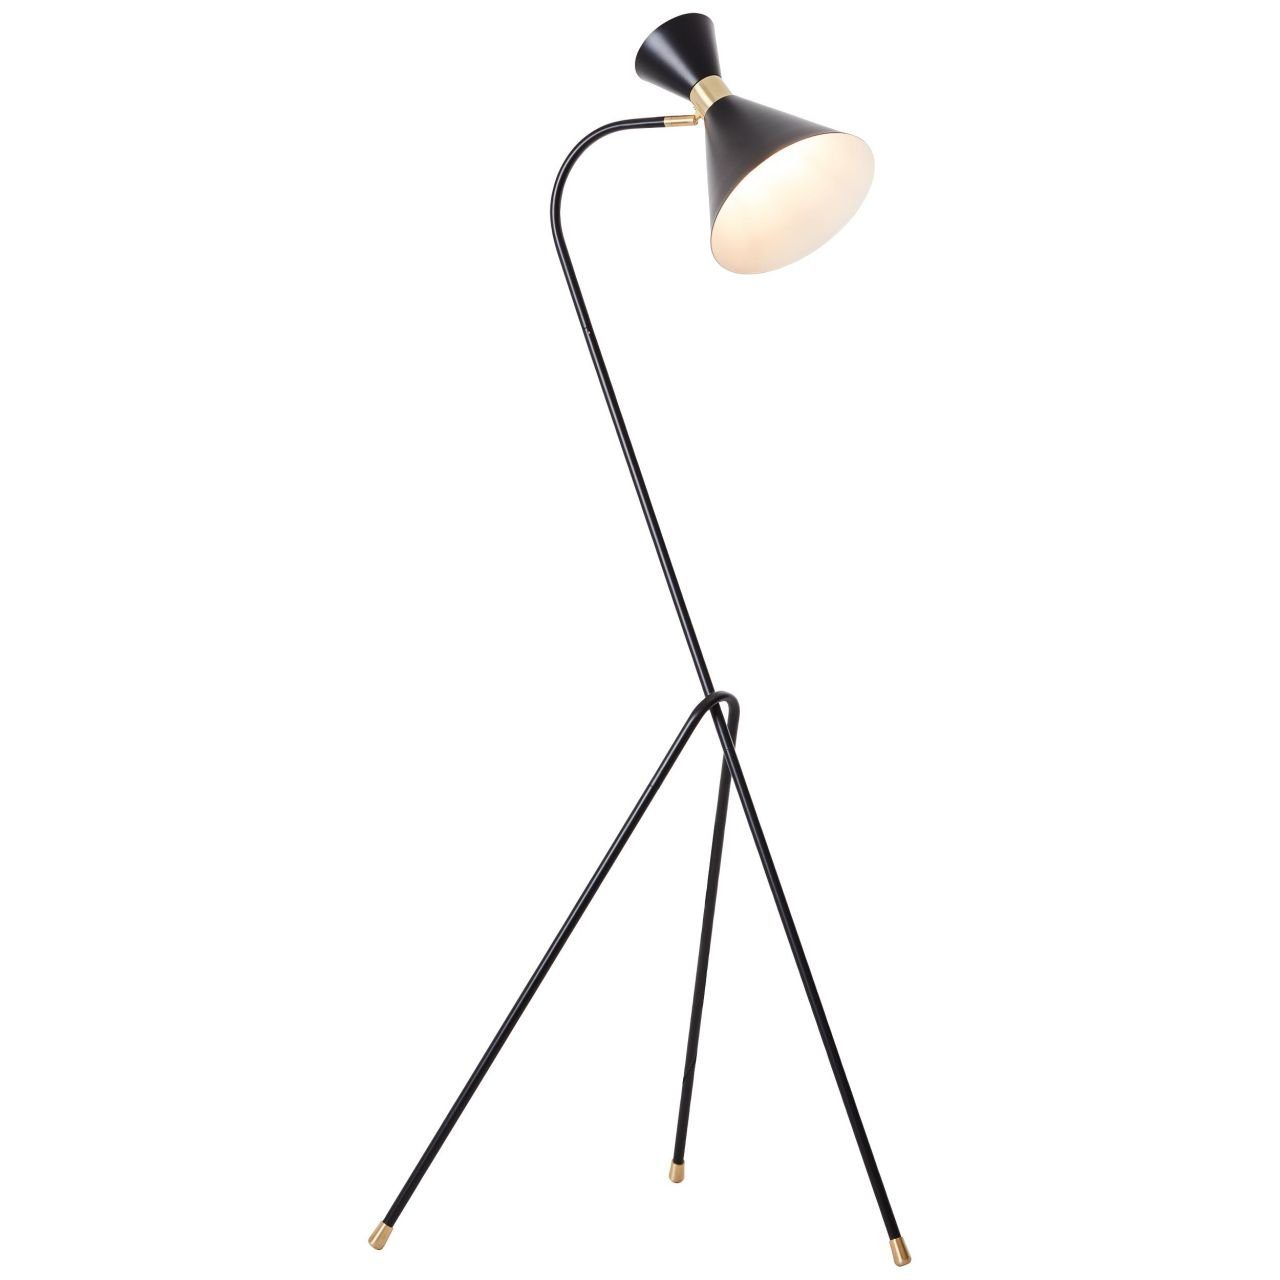 Brilliant Stehlampe Jervis, Jervis 1x matt/messing 1flg gebürstet E27 schwarz A60, Standleuchte